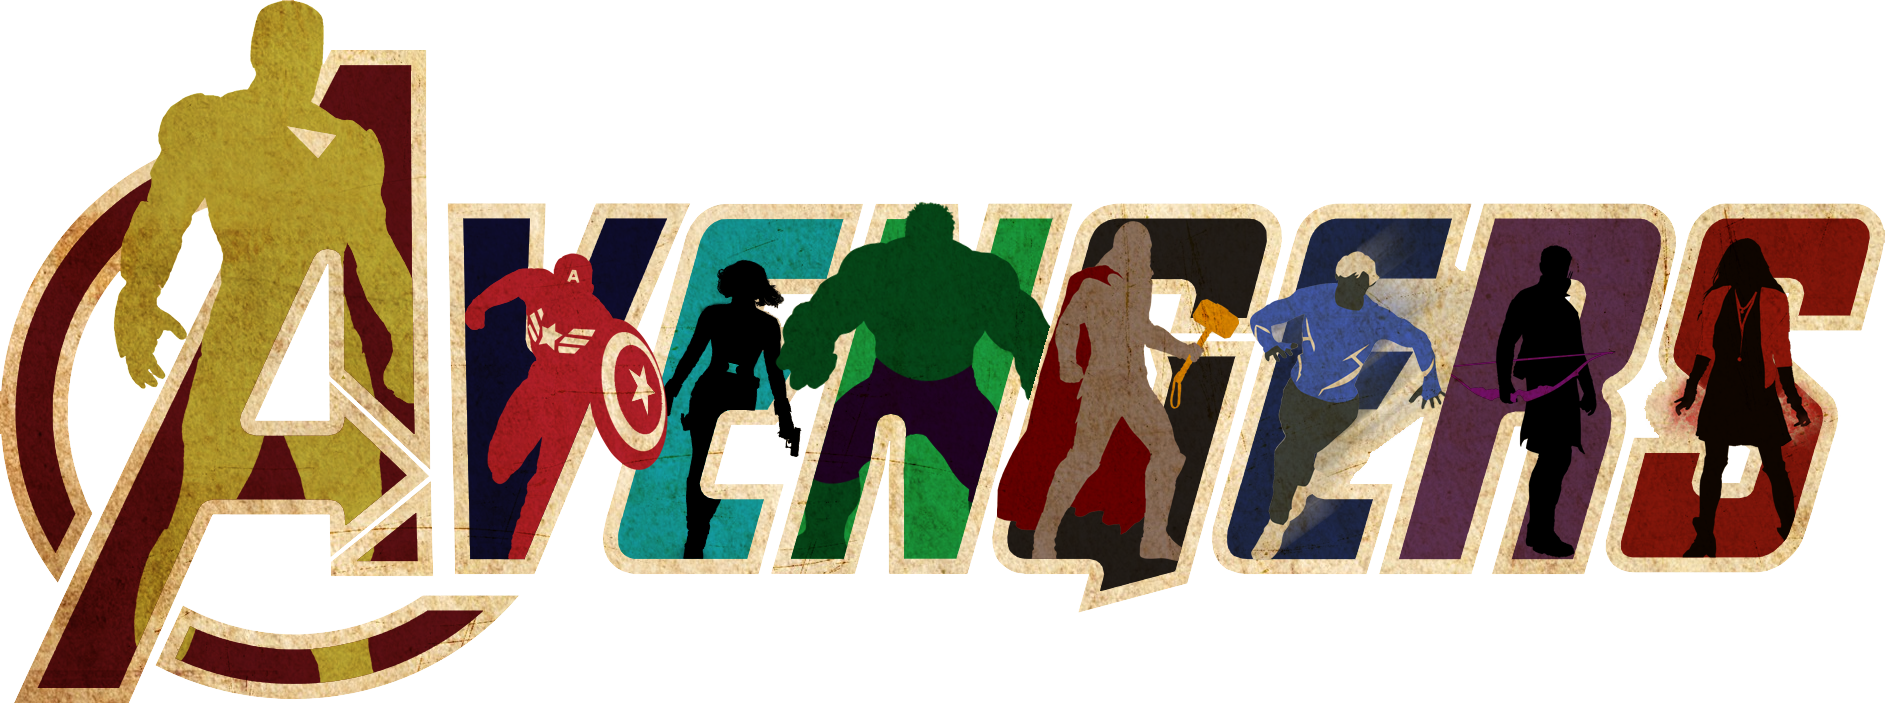 Avengers Logo Vector PNG - 104694